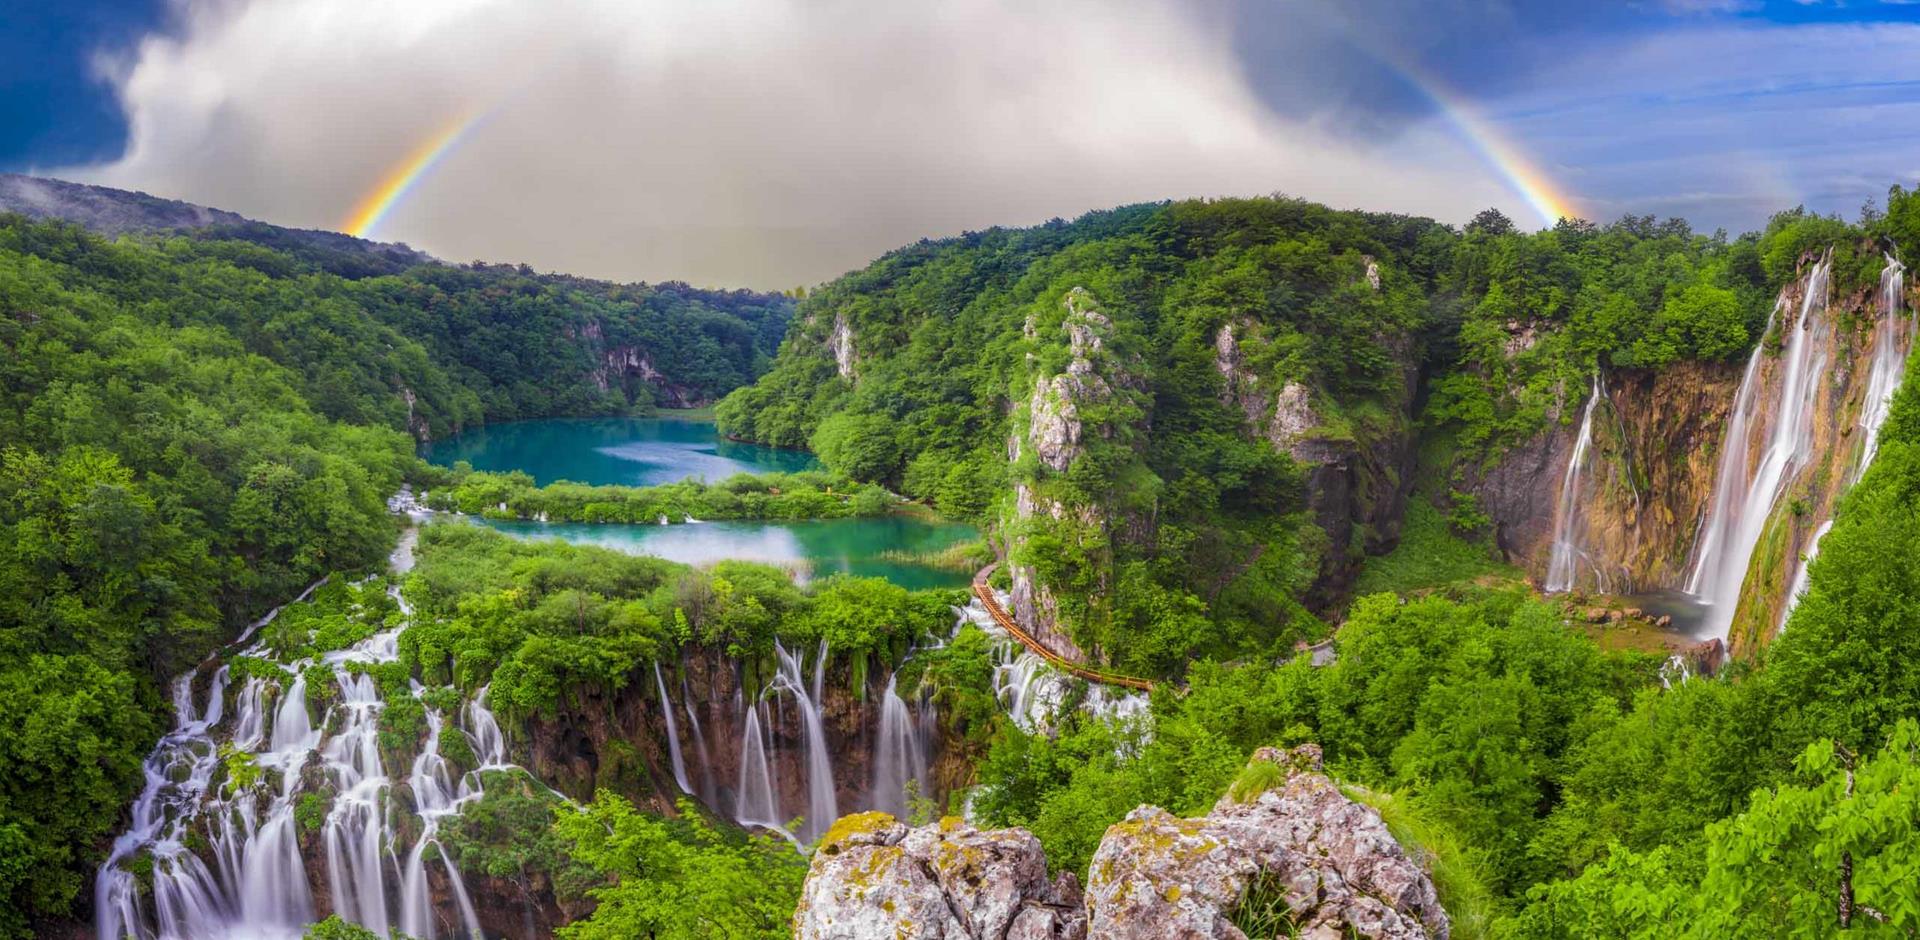 MAIN_Plitvice Lakes National Park -4